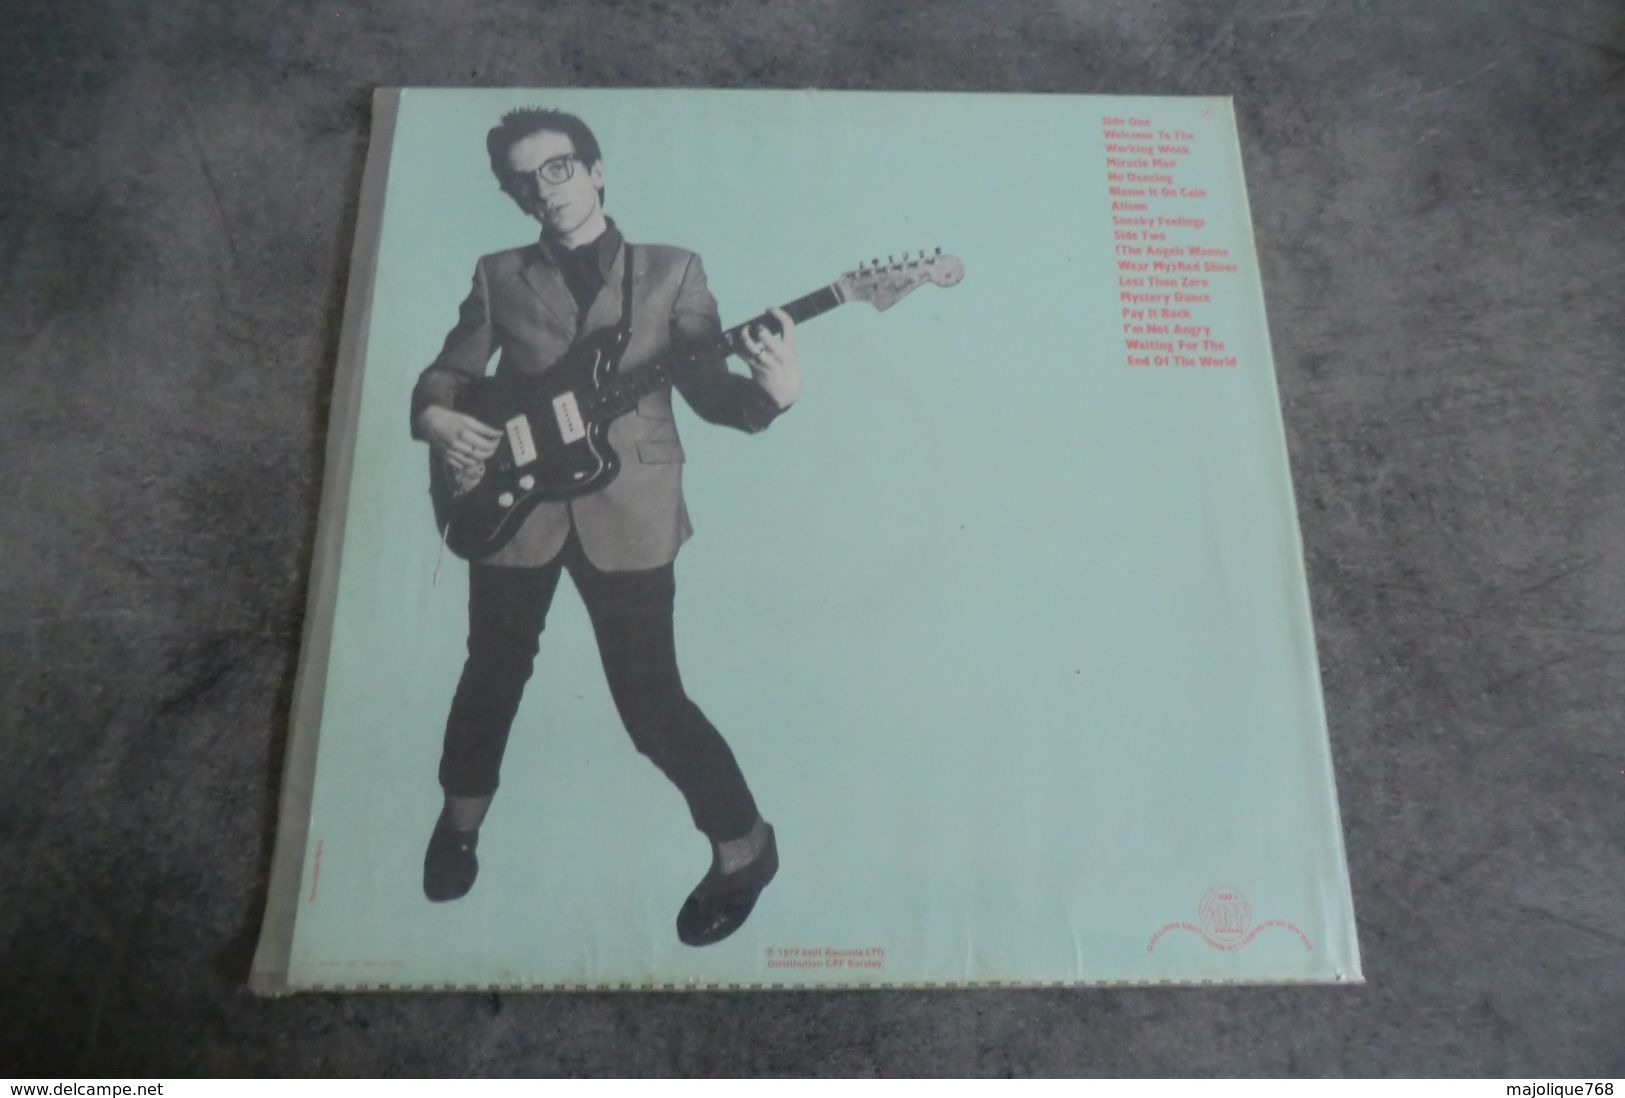 Disque - Elvis Costello - My Aim True - + Single Special Bonus - Watching The Detectives - Stiff Records 940560 - 1977 - Rock